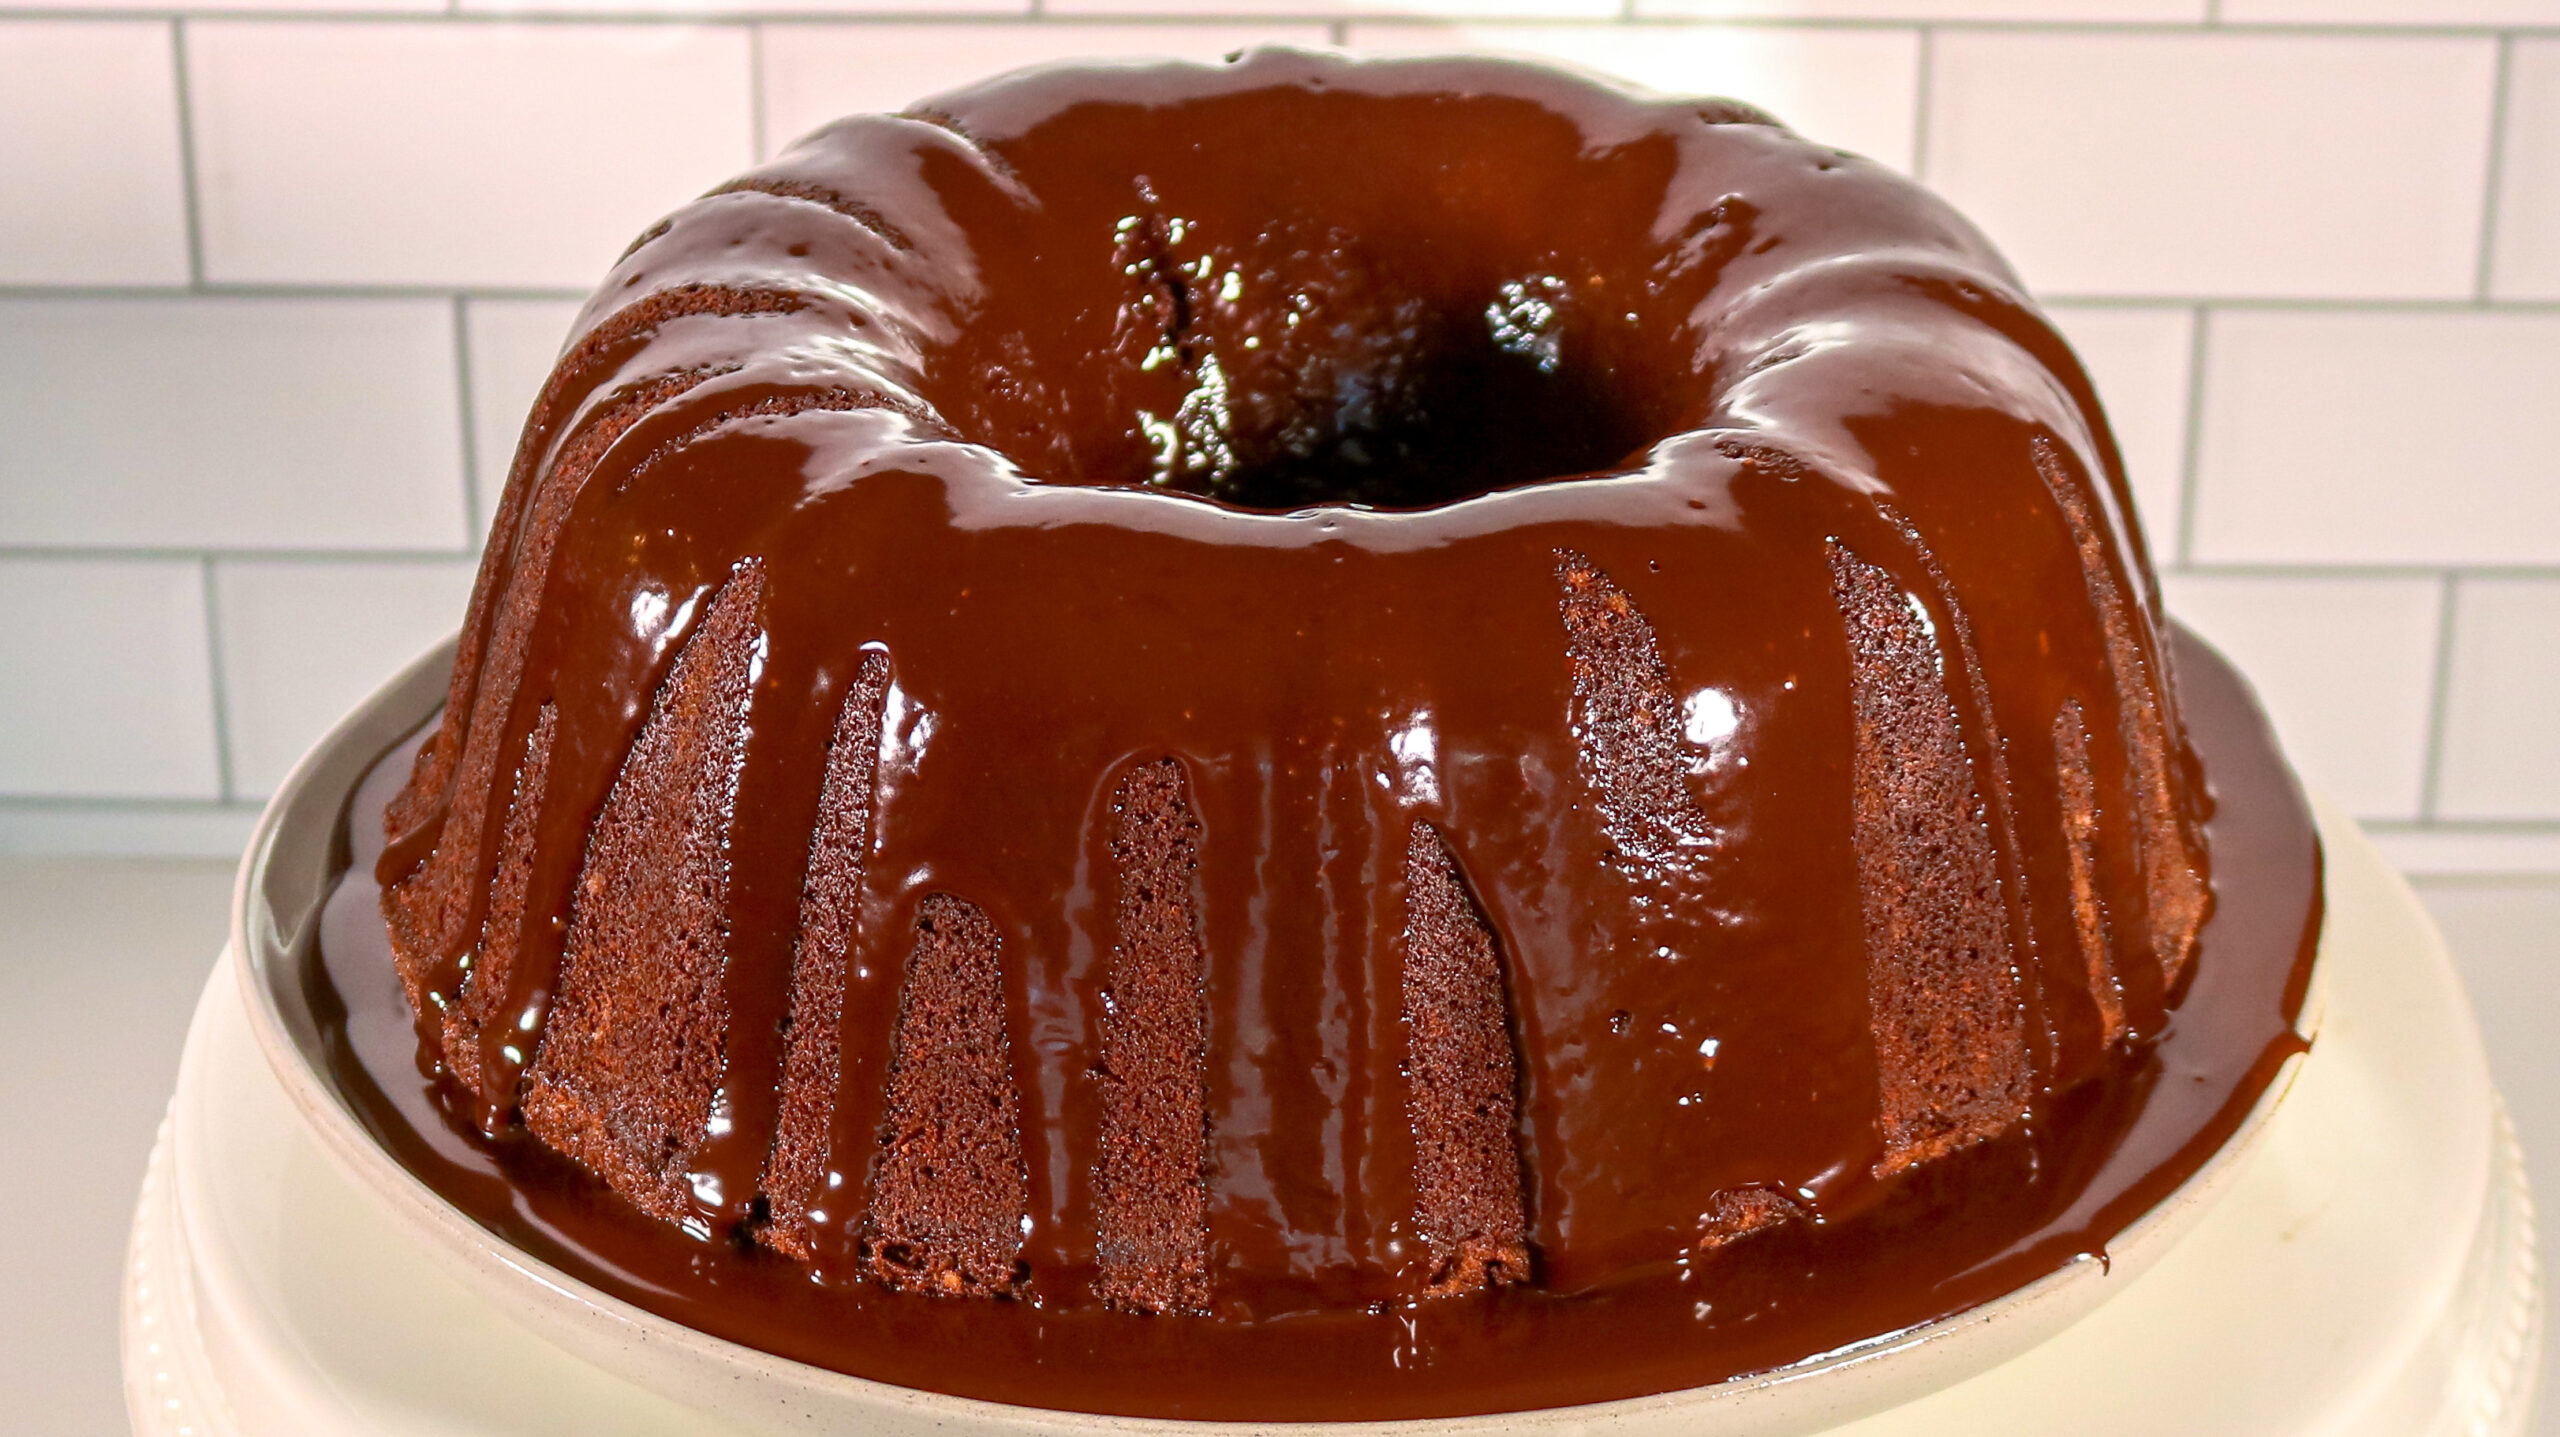 Chocolate cake for two - PrincessTafadzwa